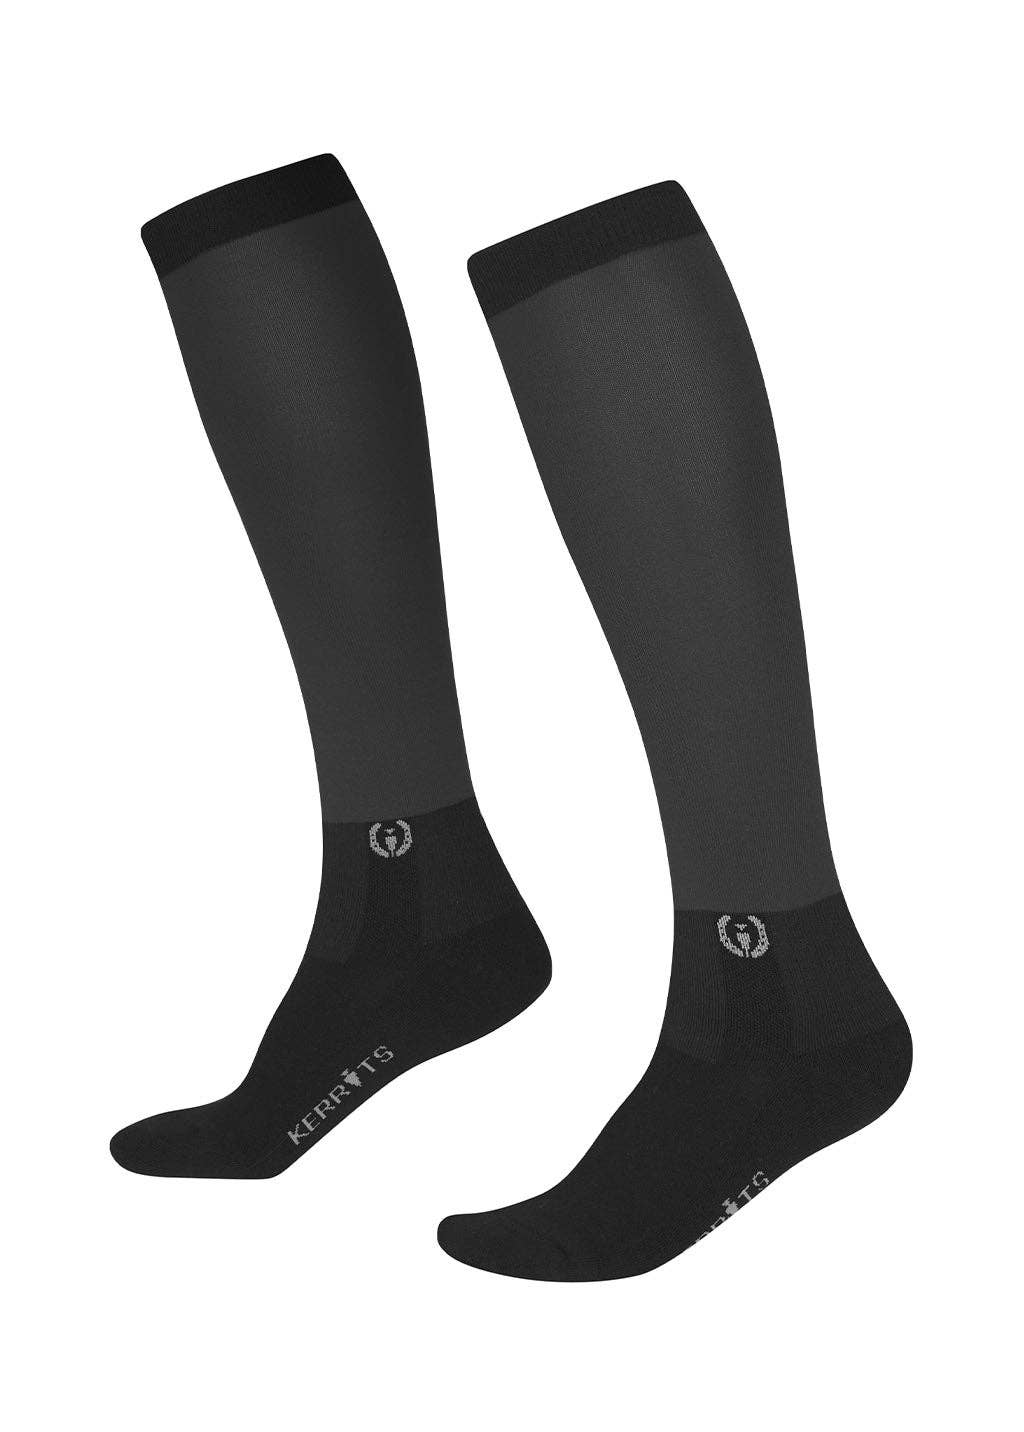 Dual Zone Boot Socks: OBSIDIAN / O/S